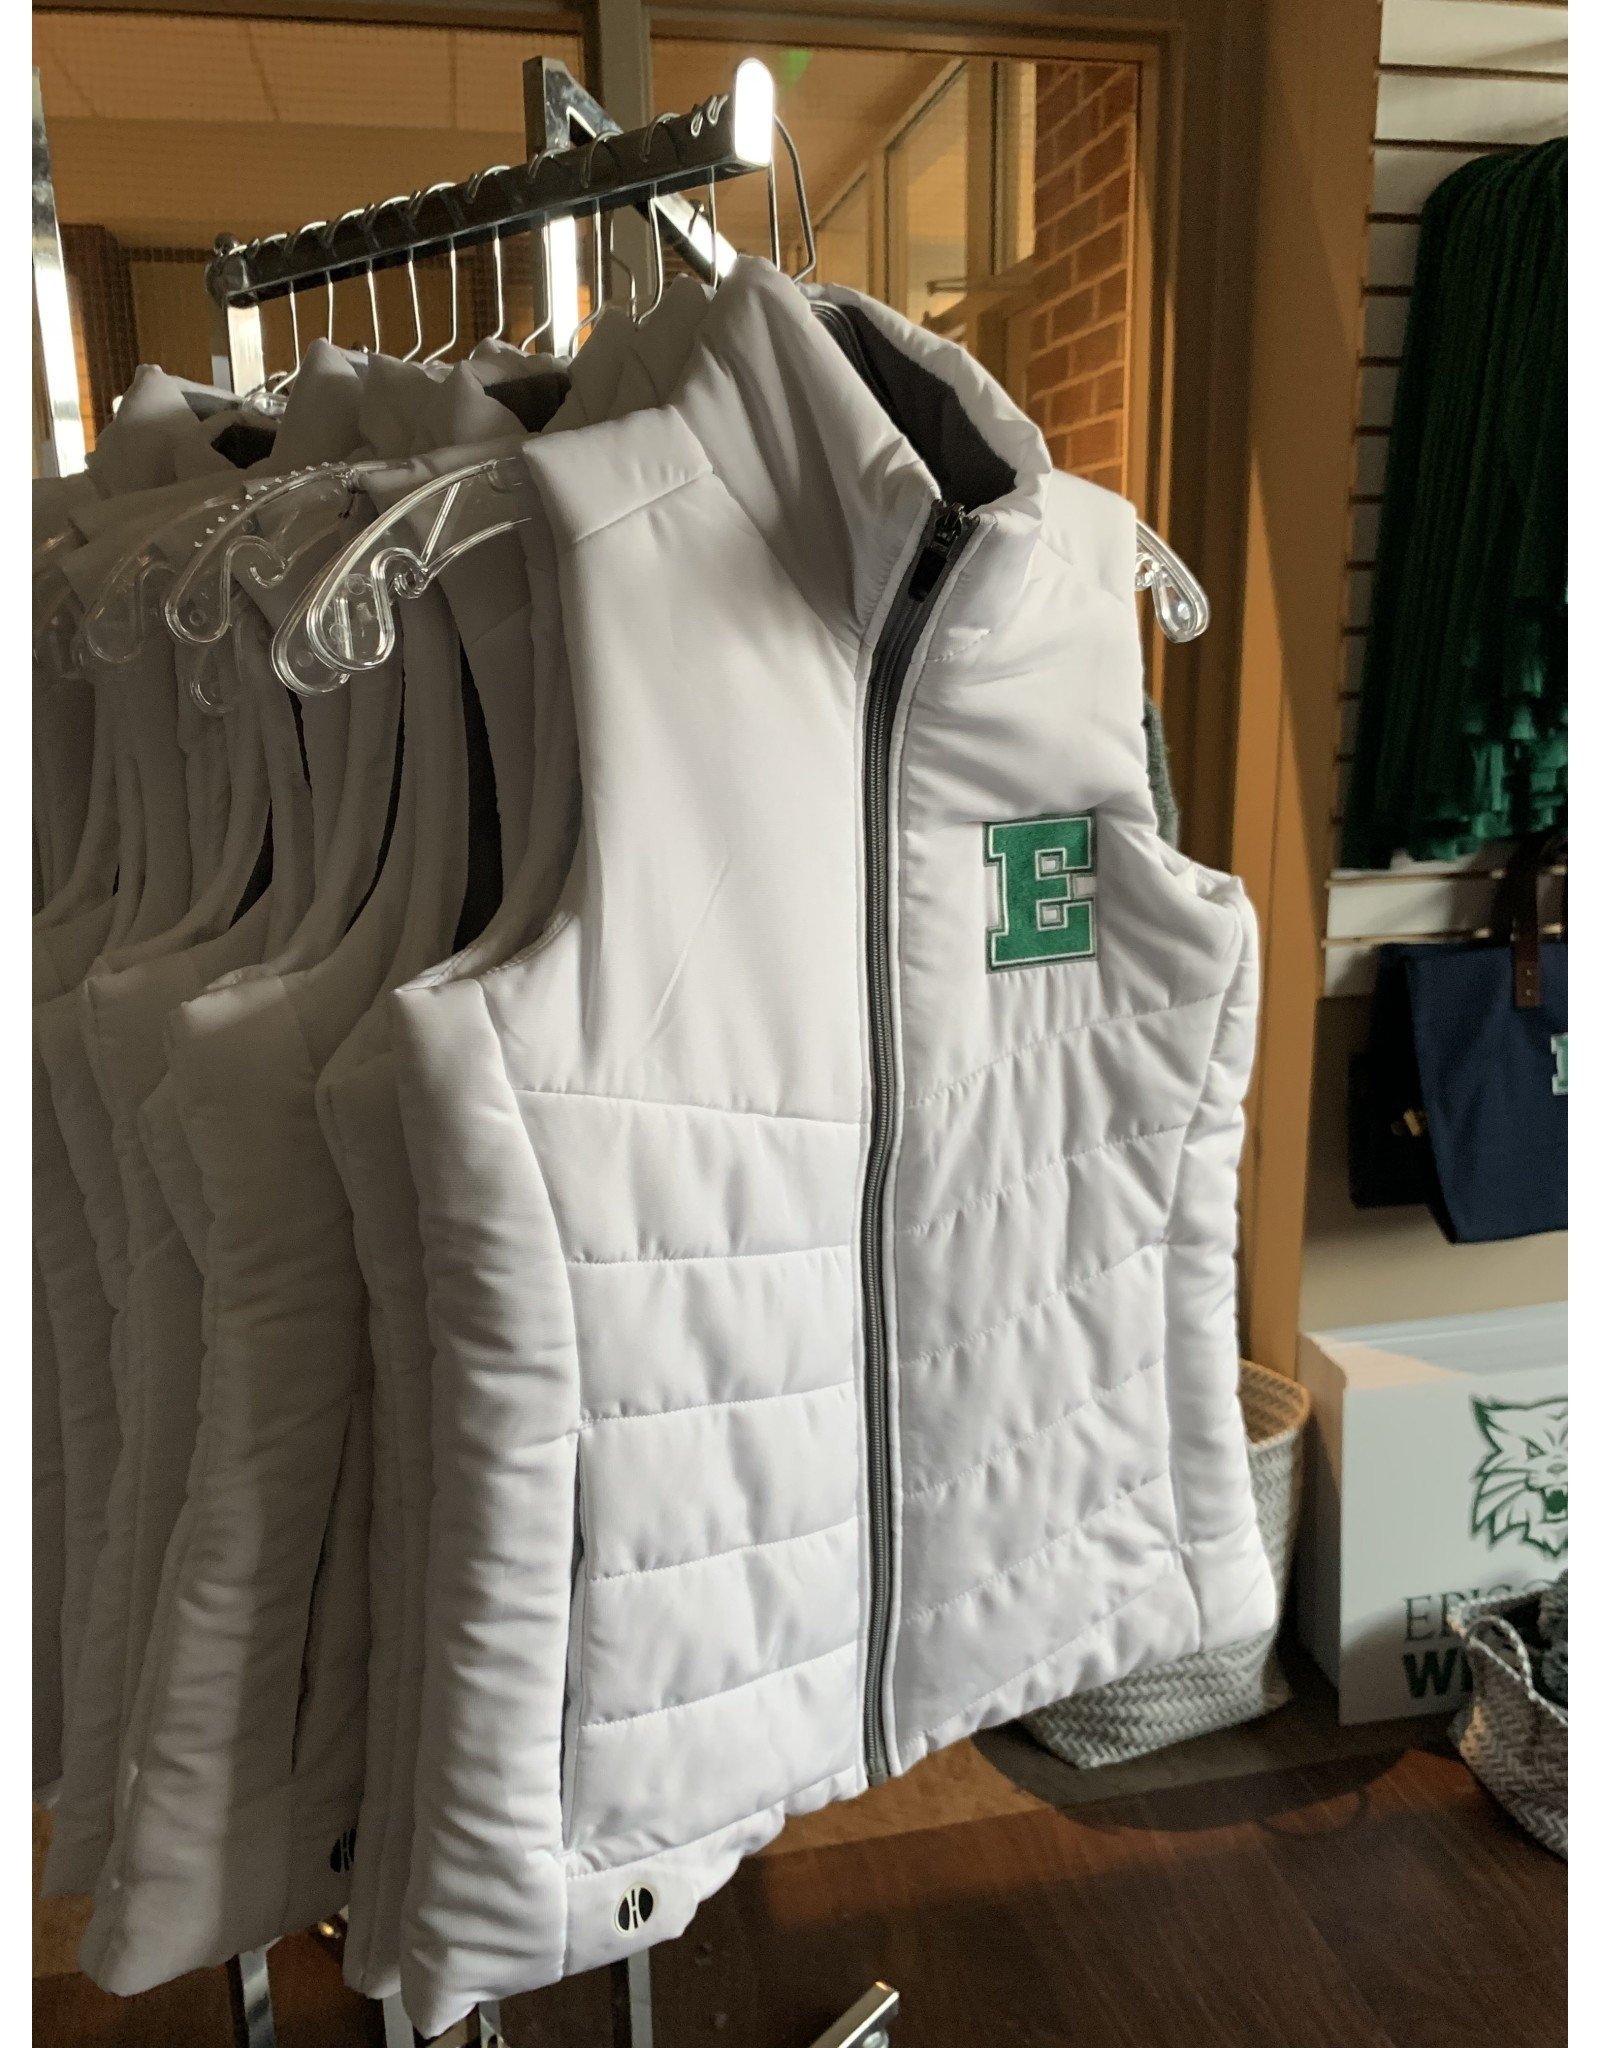 Hollaway White Vest with E logo, Women's